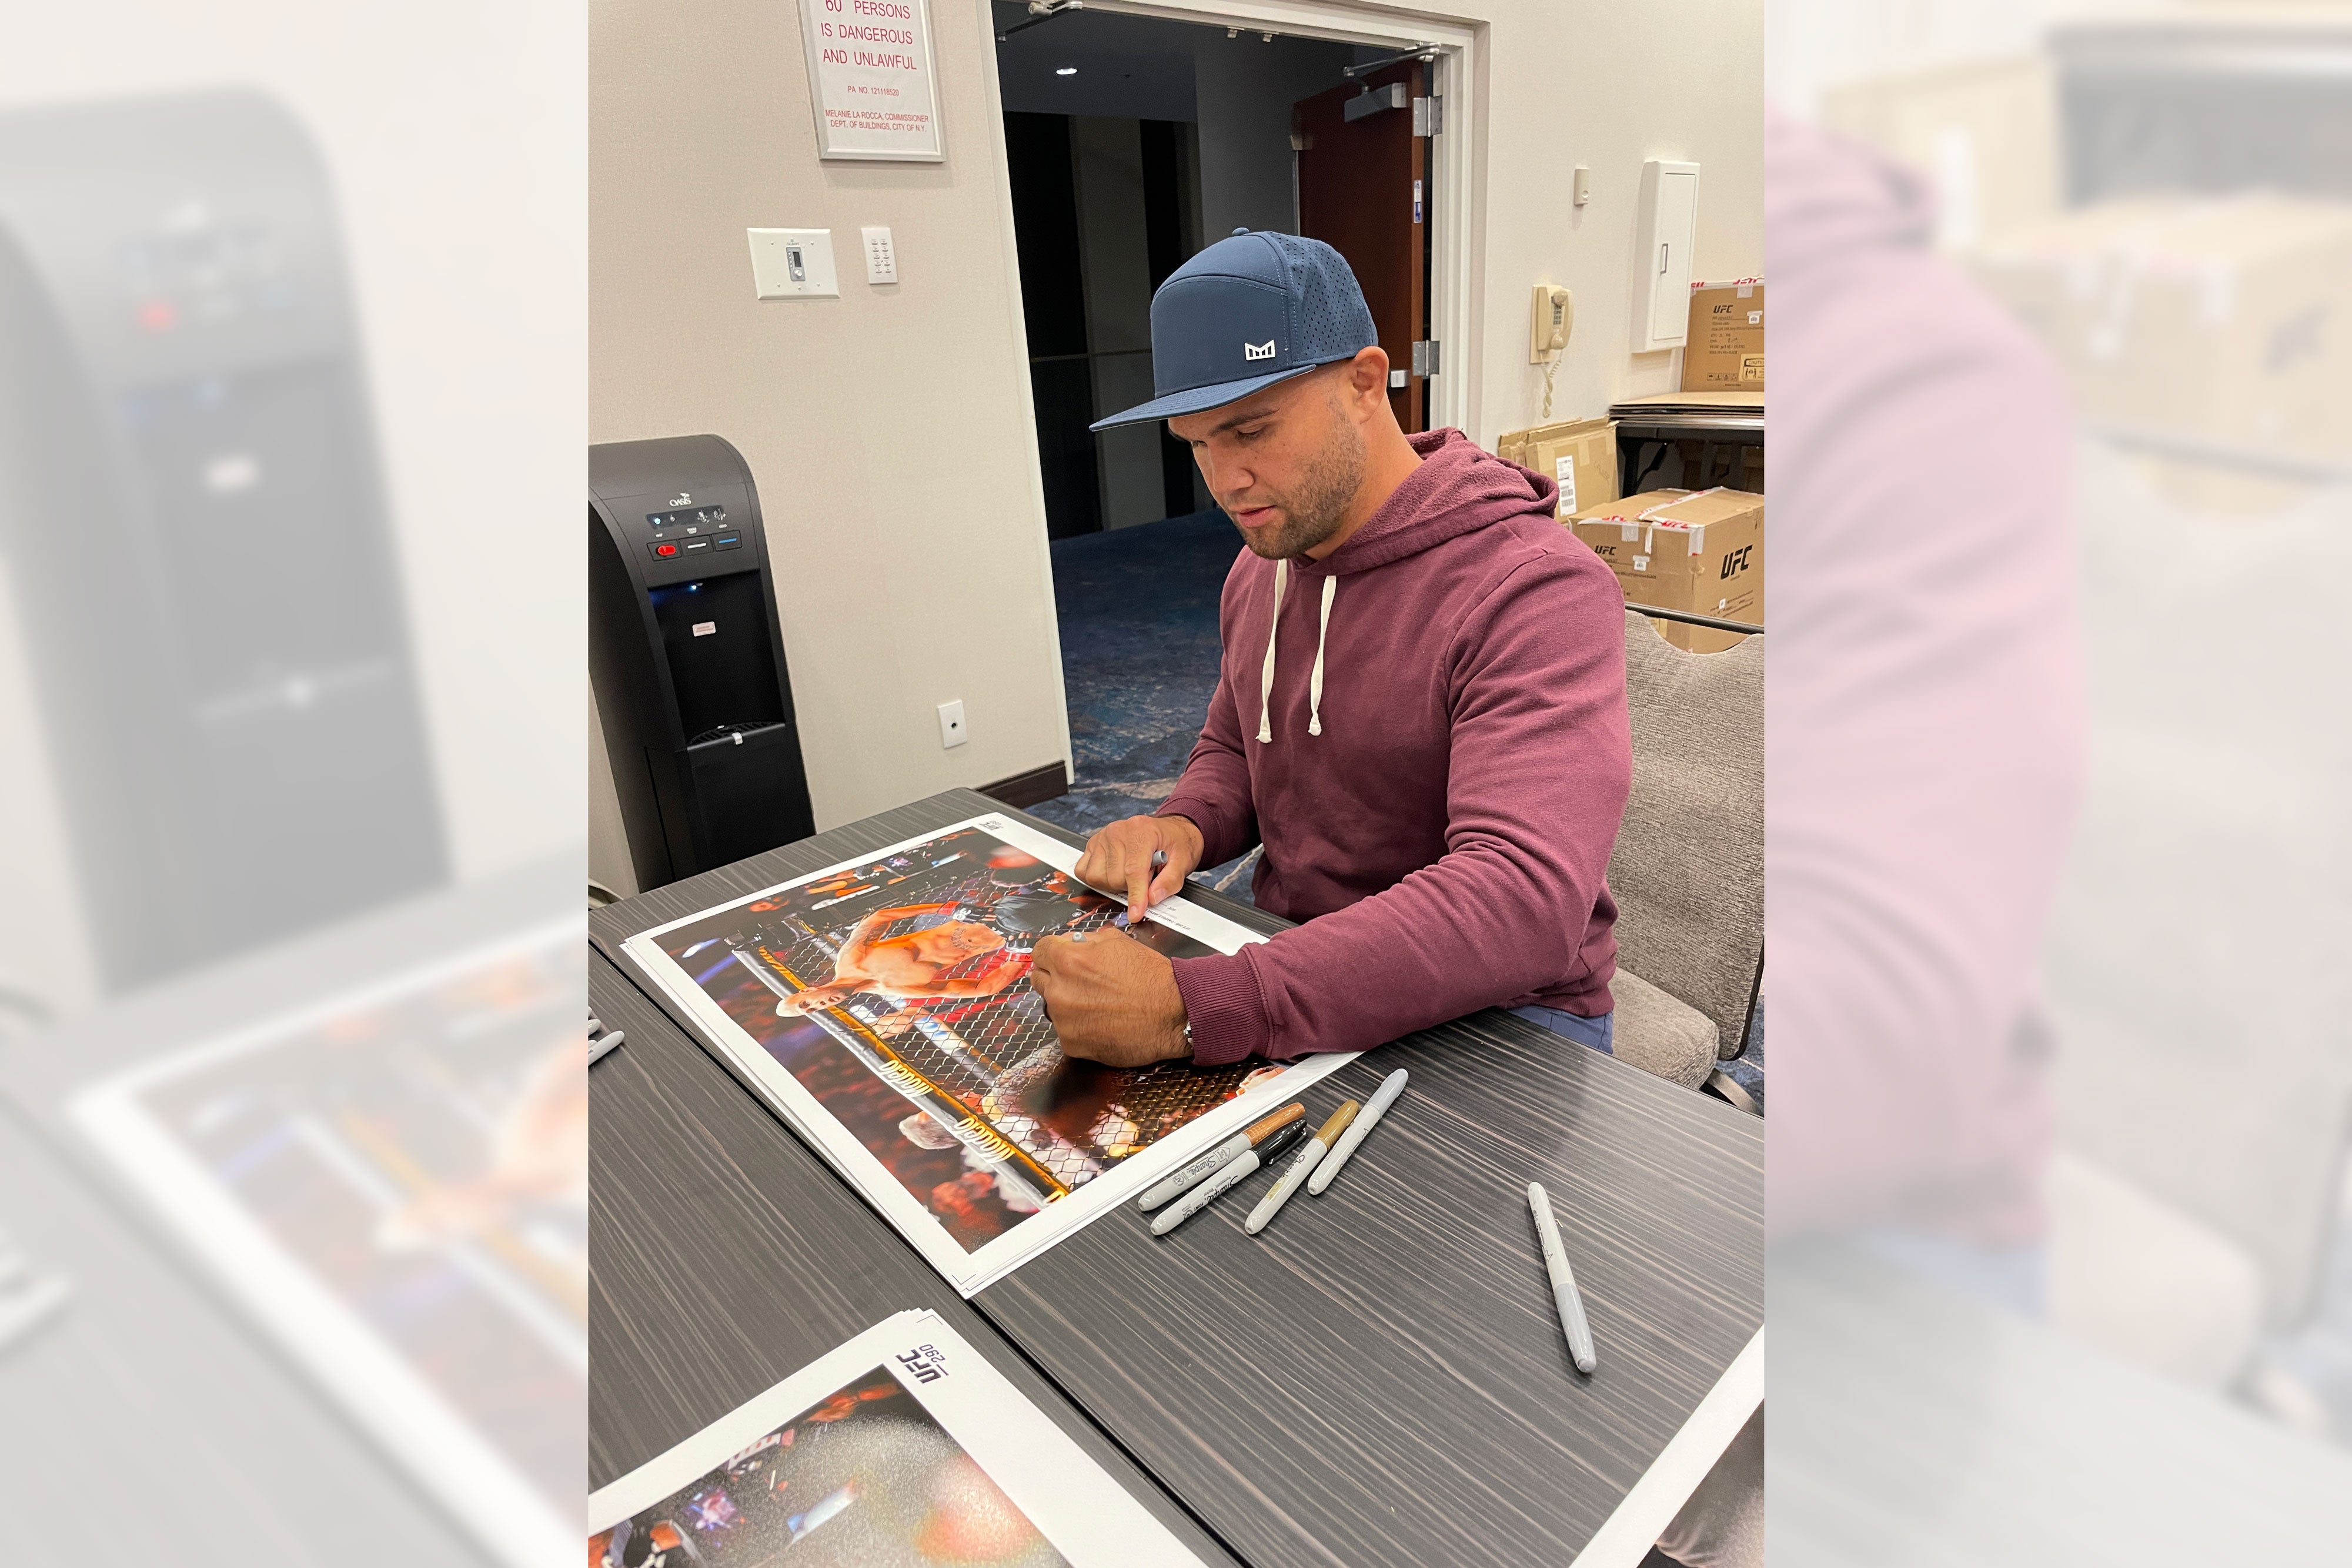 Robbie Lawler Signed Photo UFC 290